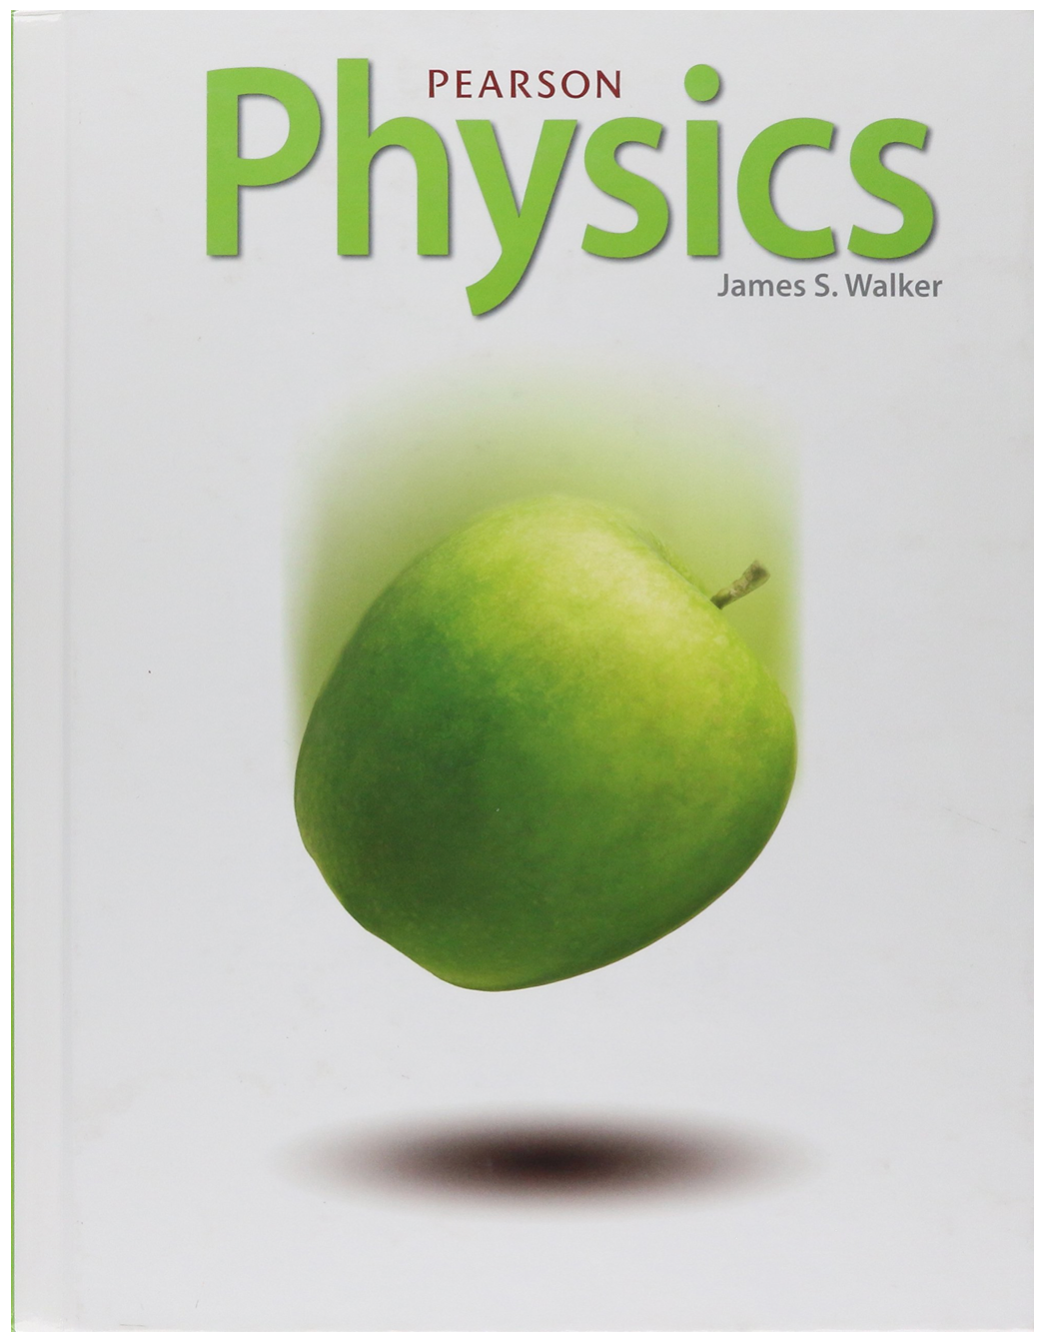 Physics - Pearson - James S. Walker